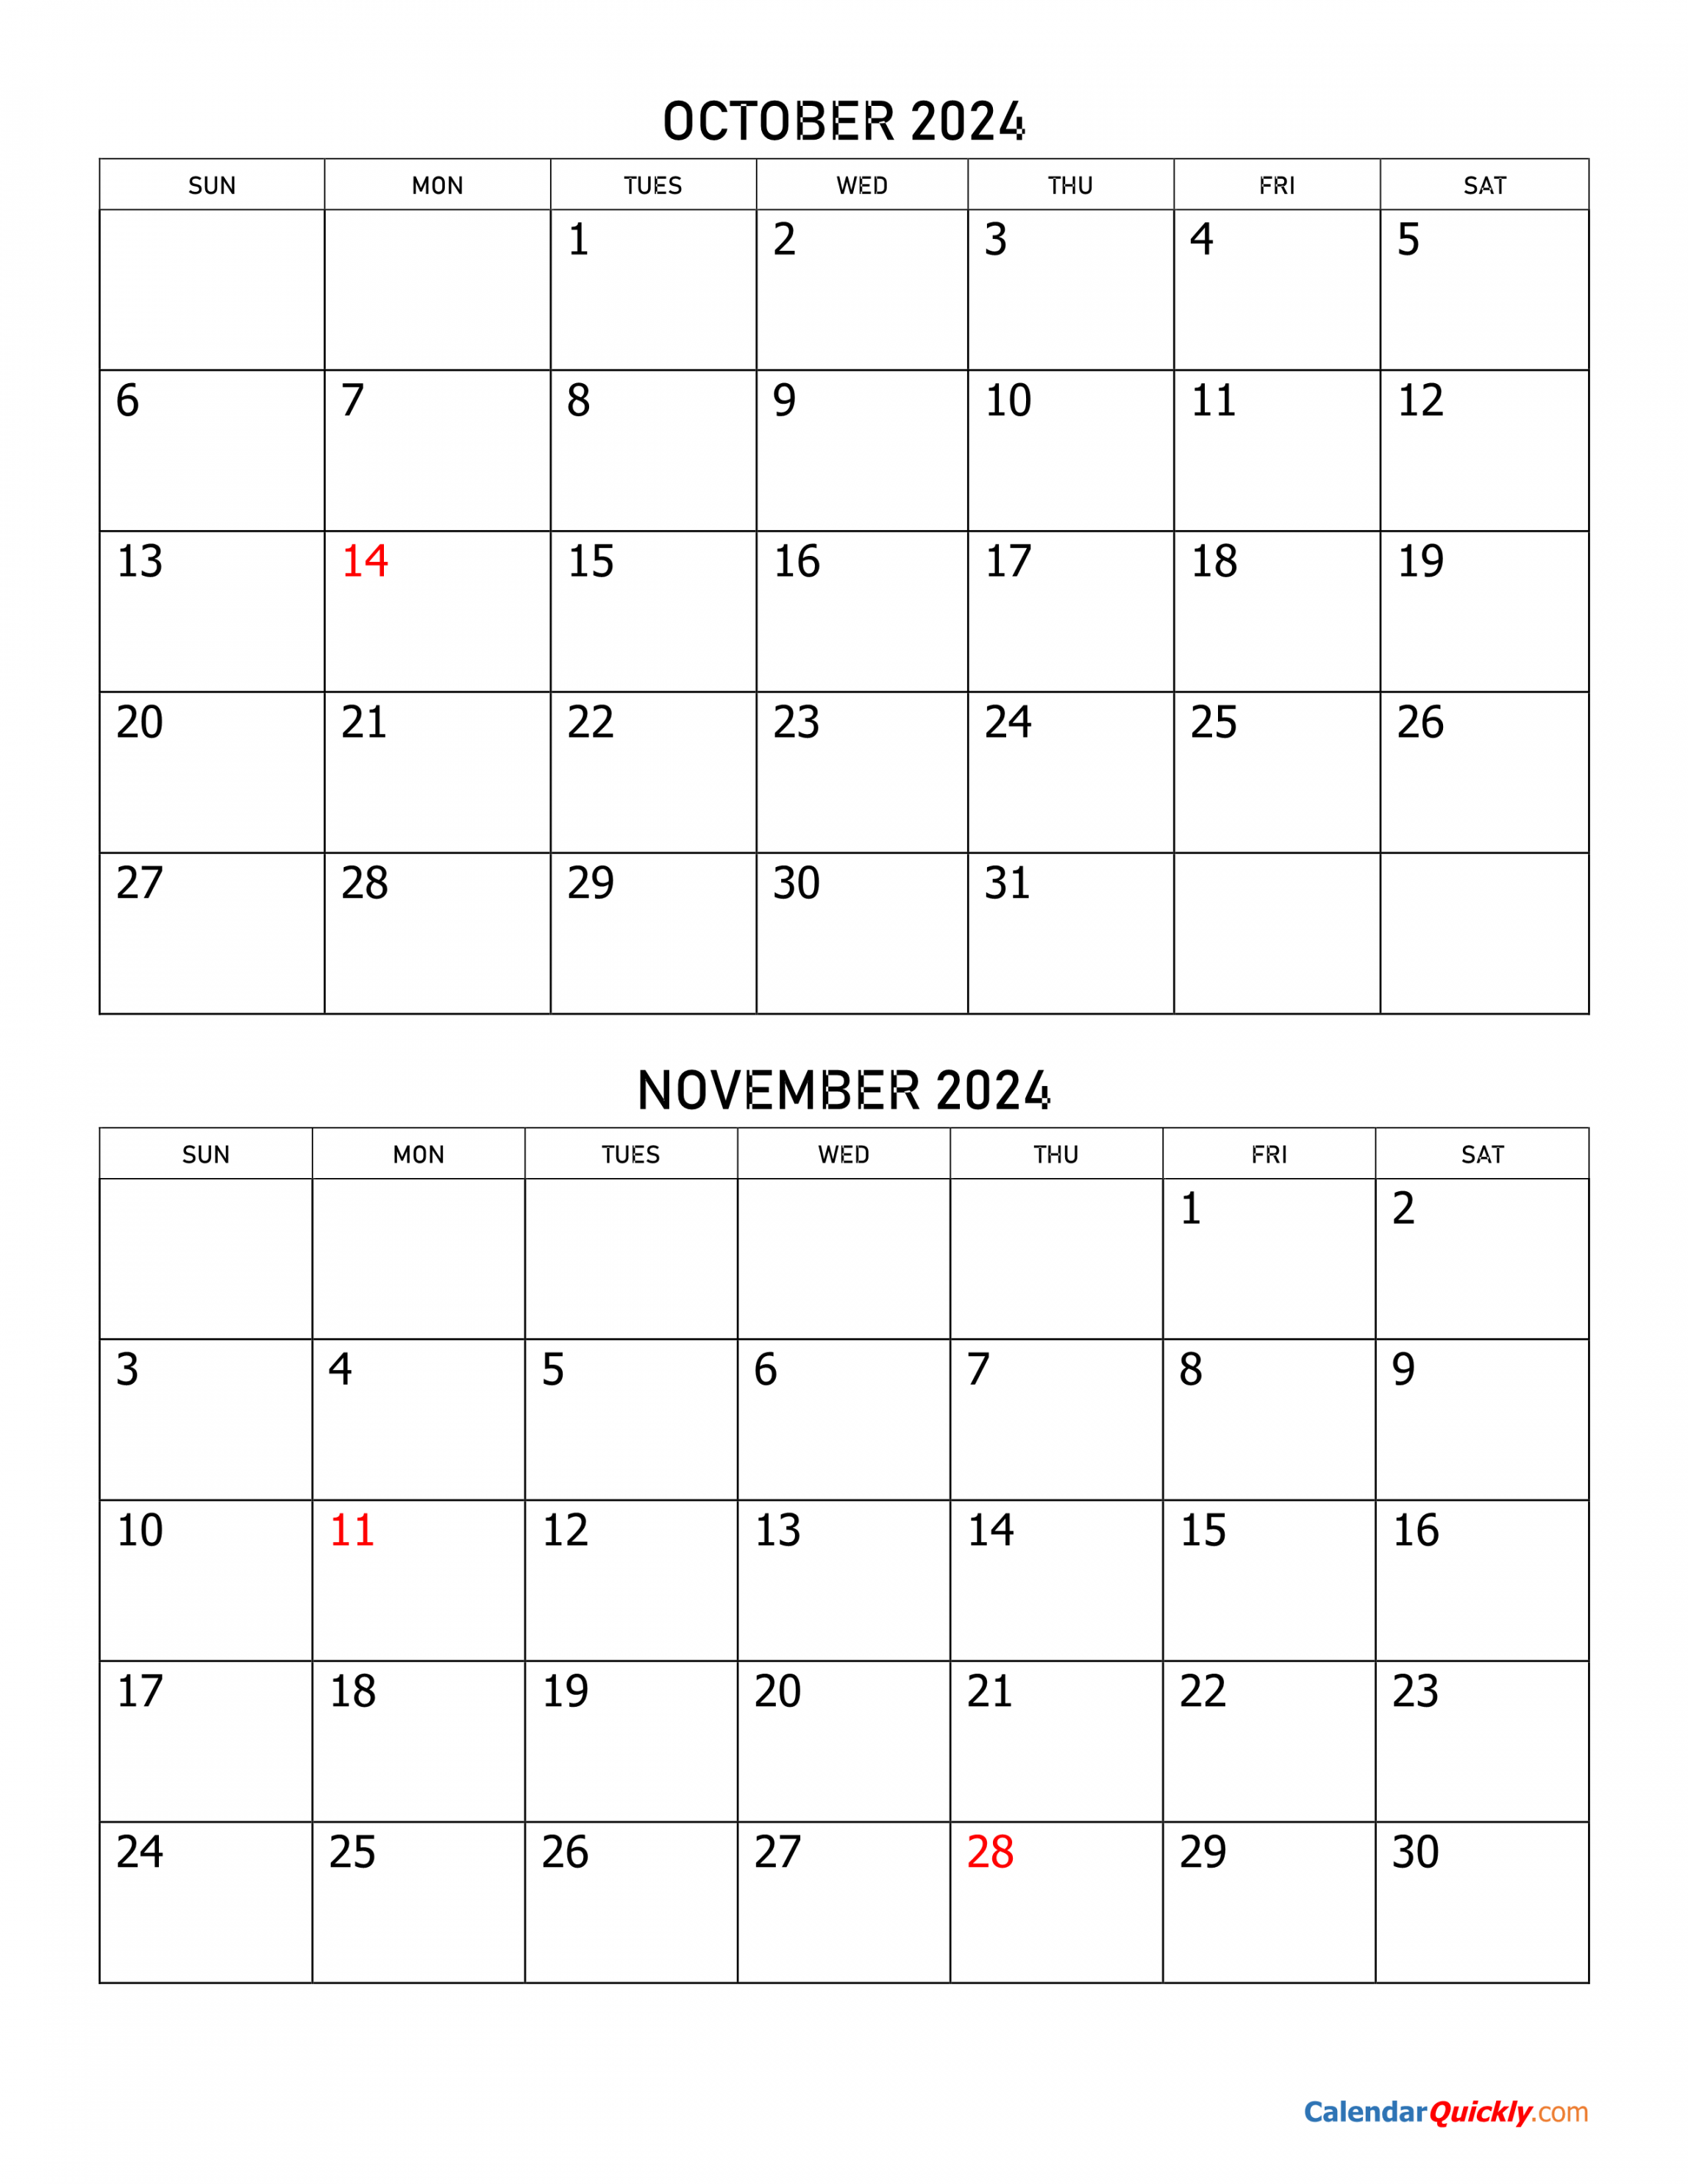 october and november calendar calendar quickly 0